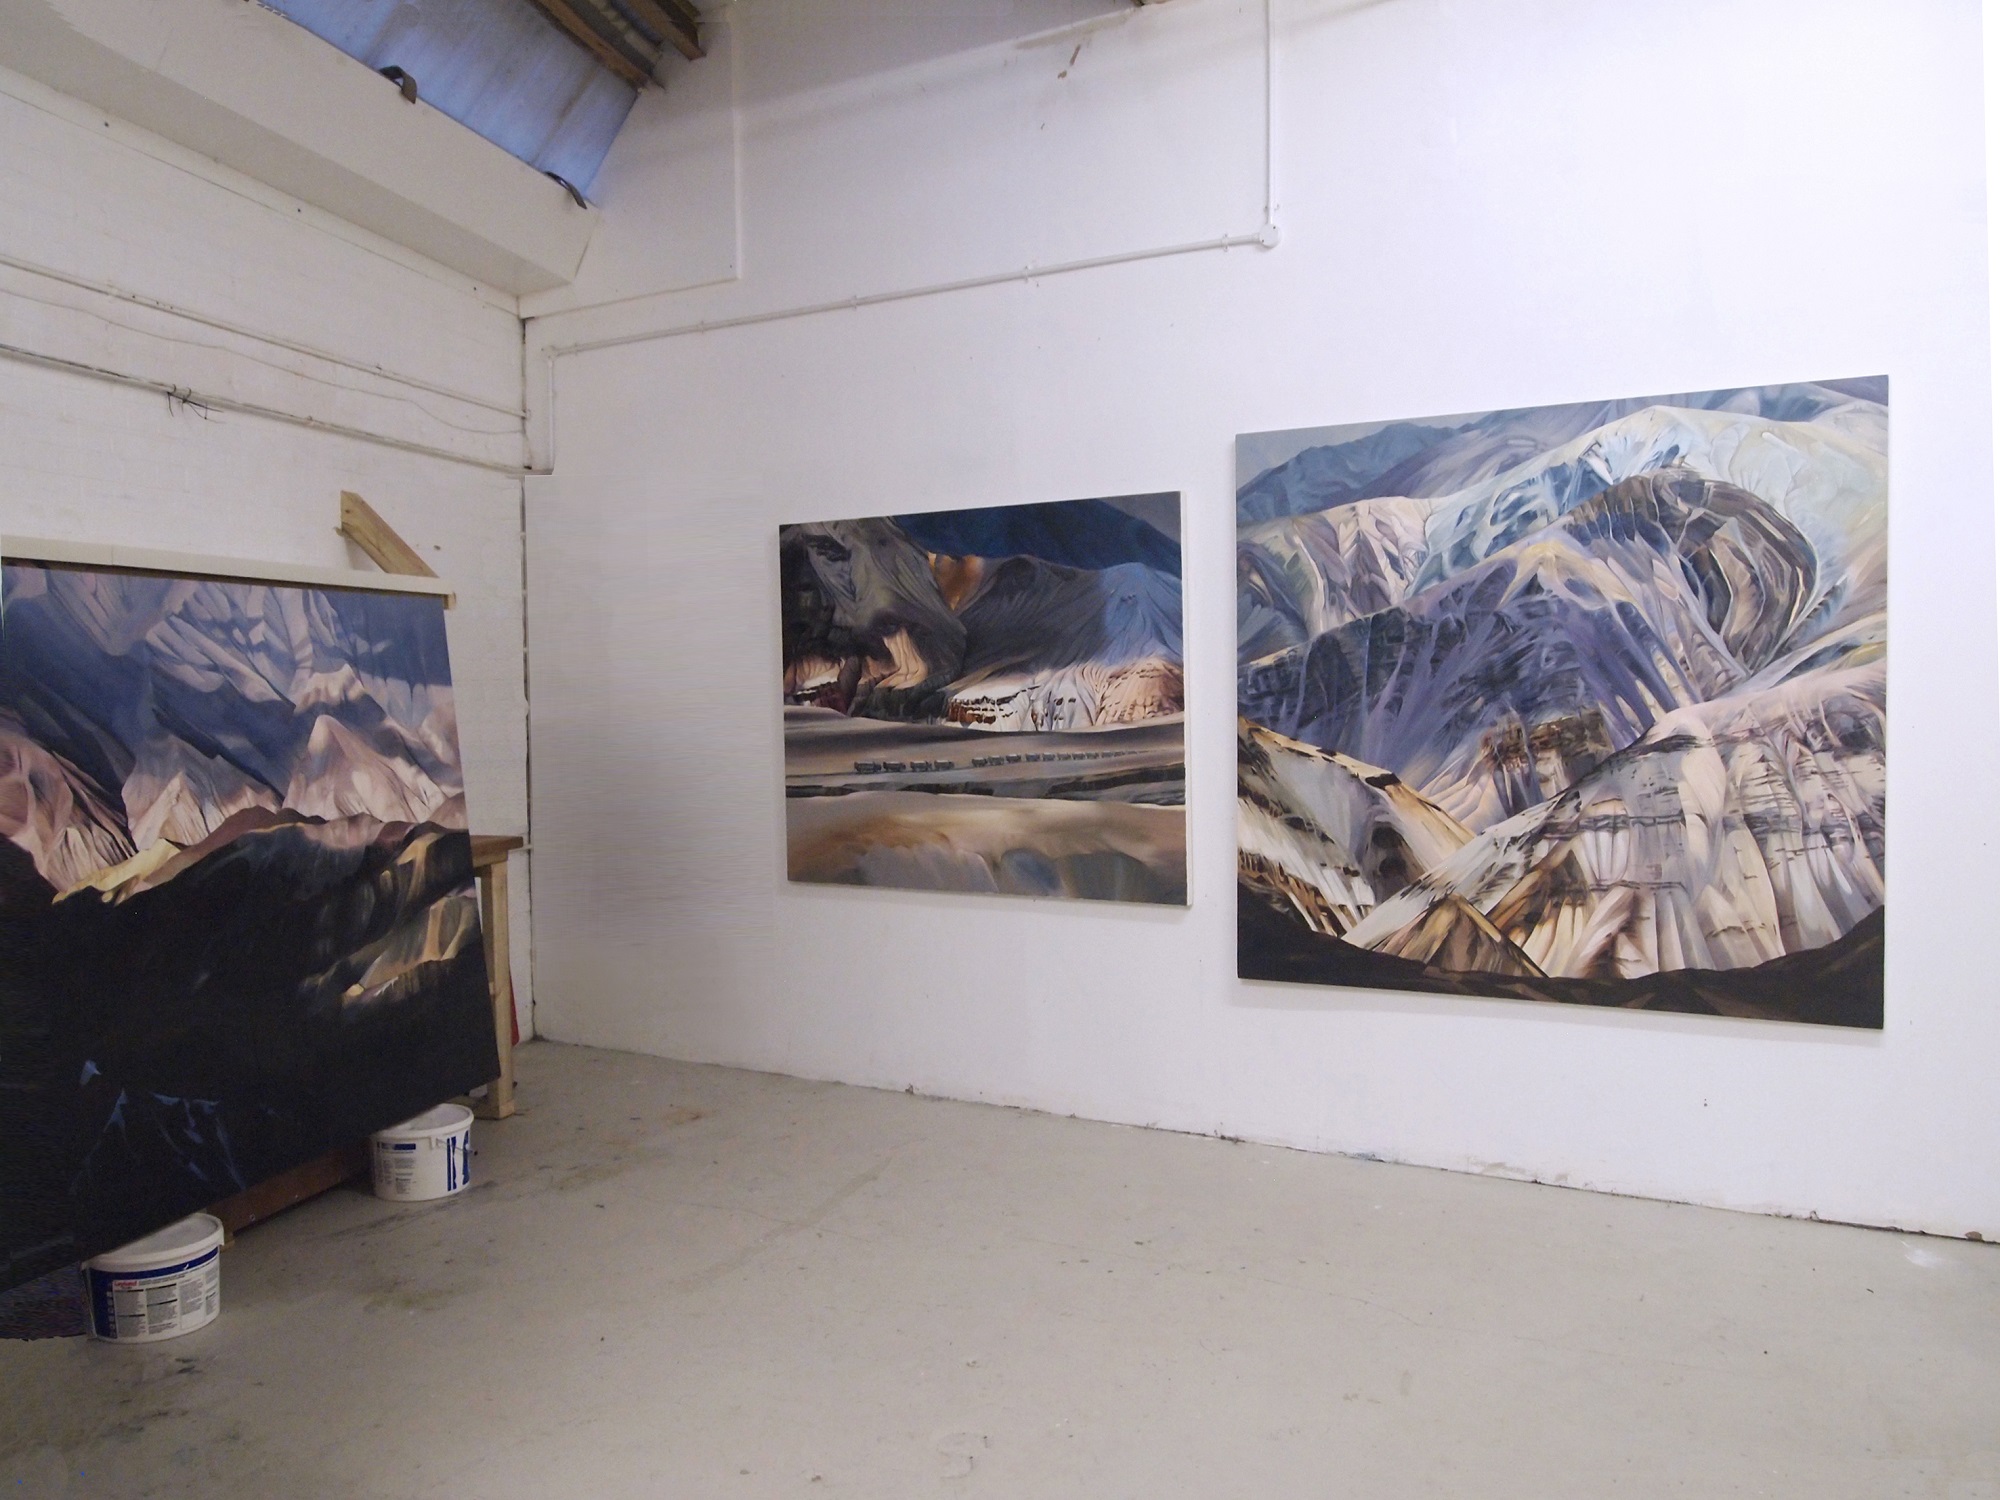 Polly Townsend's Studio